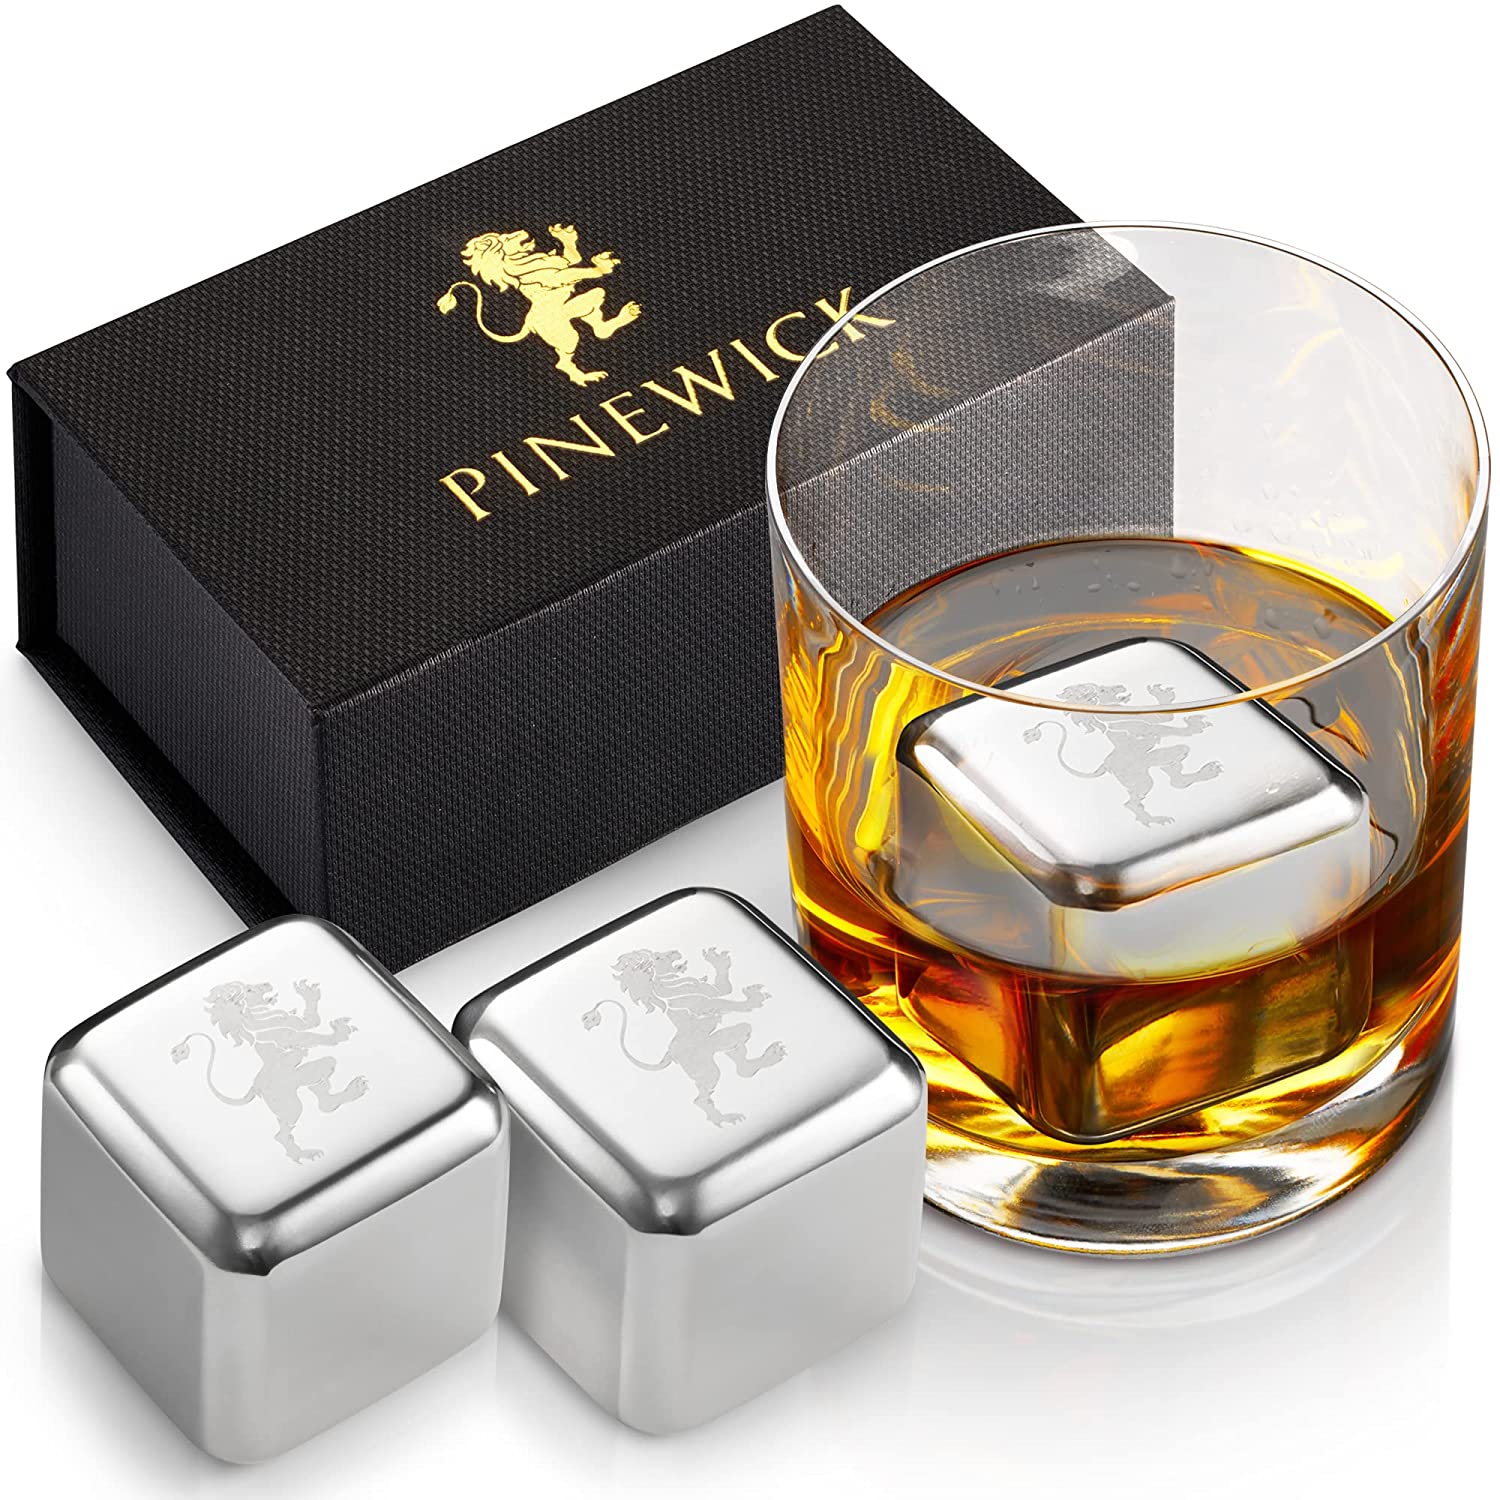 New Delivery for Whiskey Cube Stone - Custom design Stainless steel Whiskey Stones  Luxury Gift Set  Large 4cm Cubes  – Shunstone